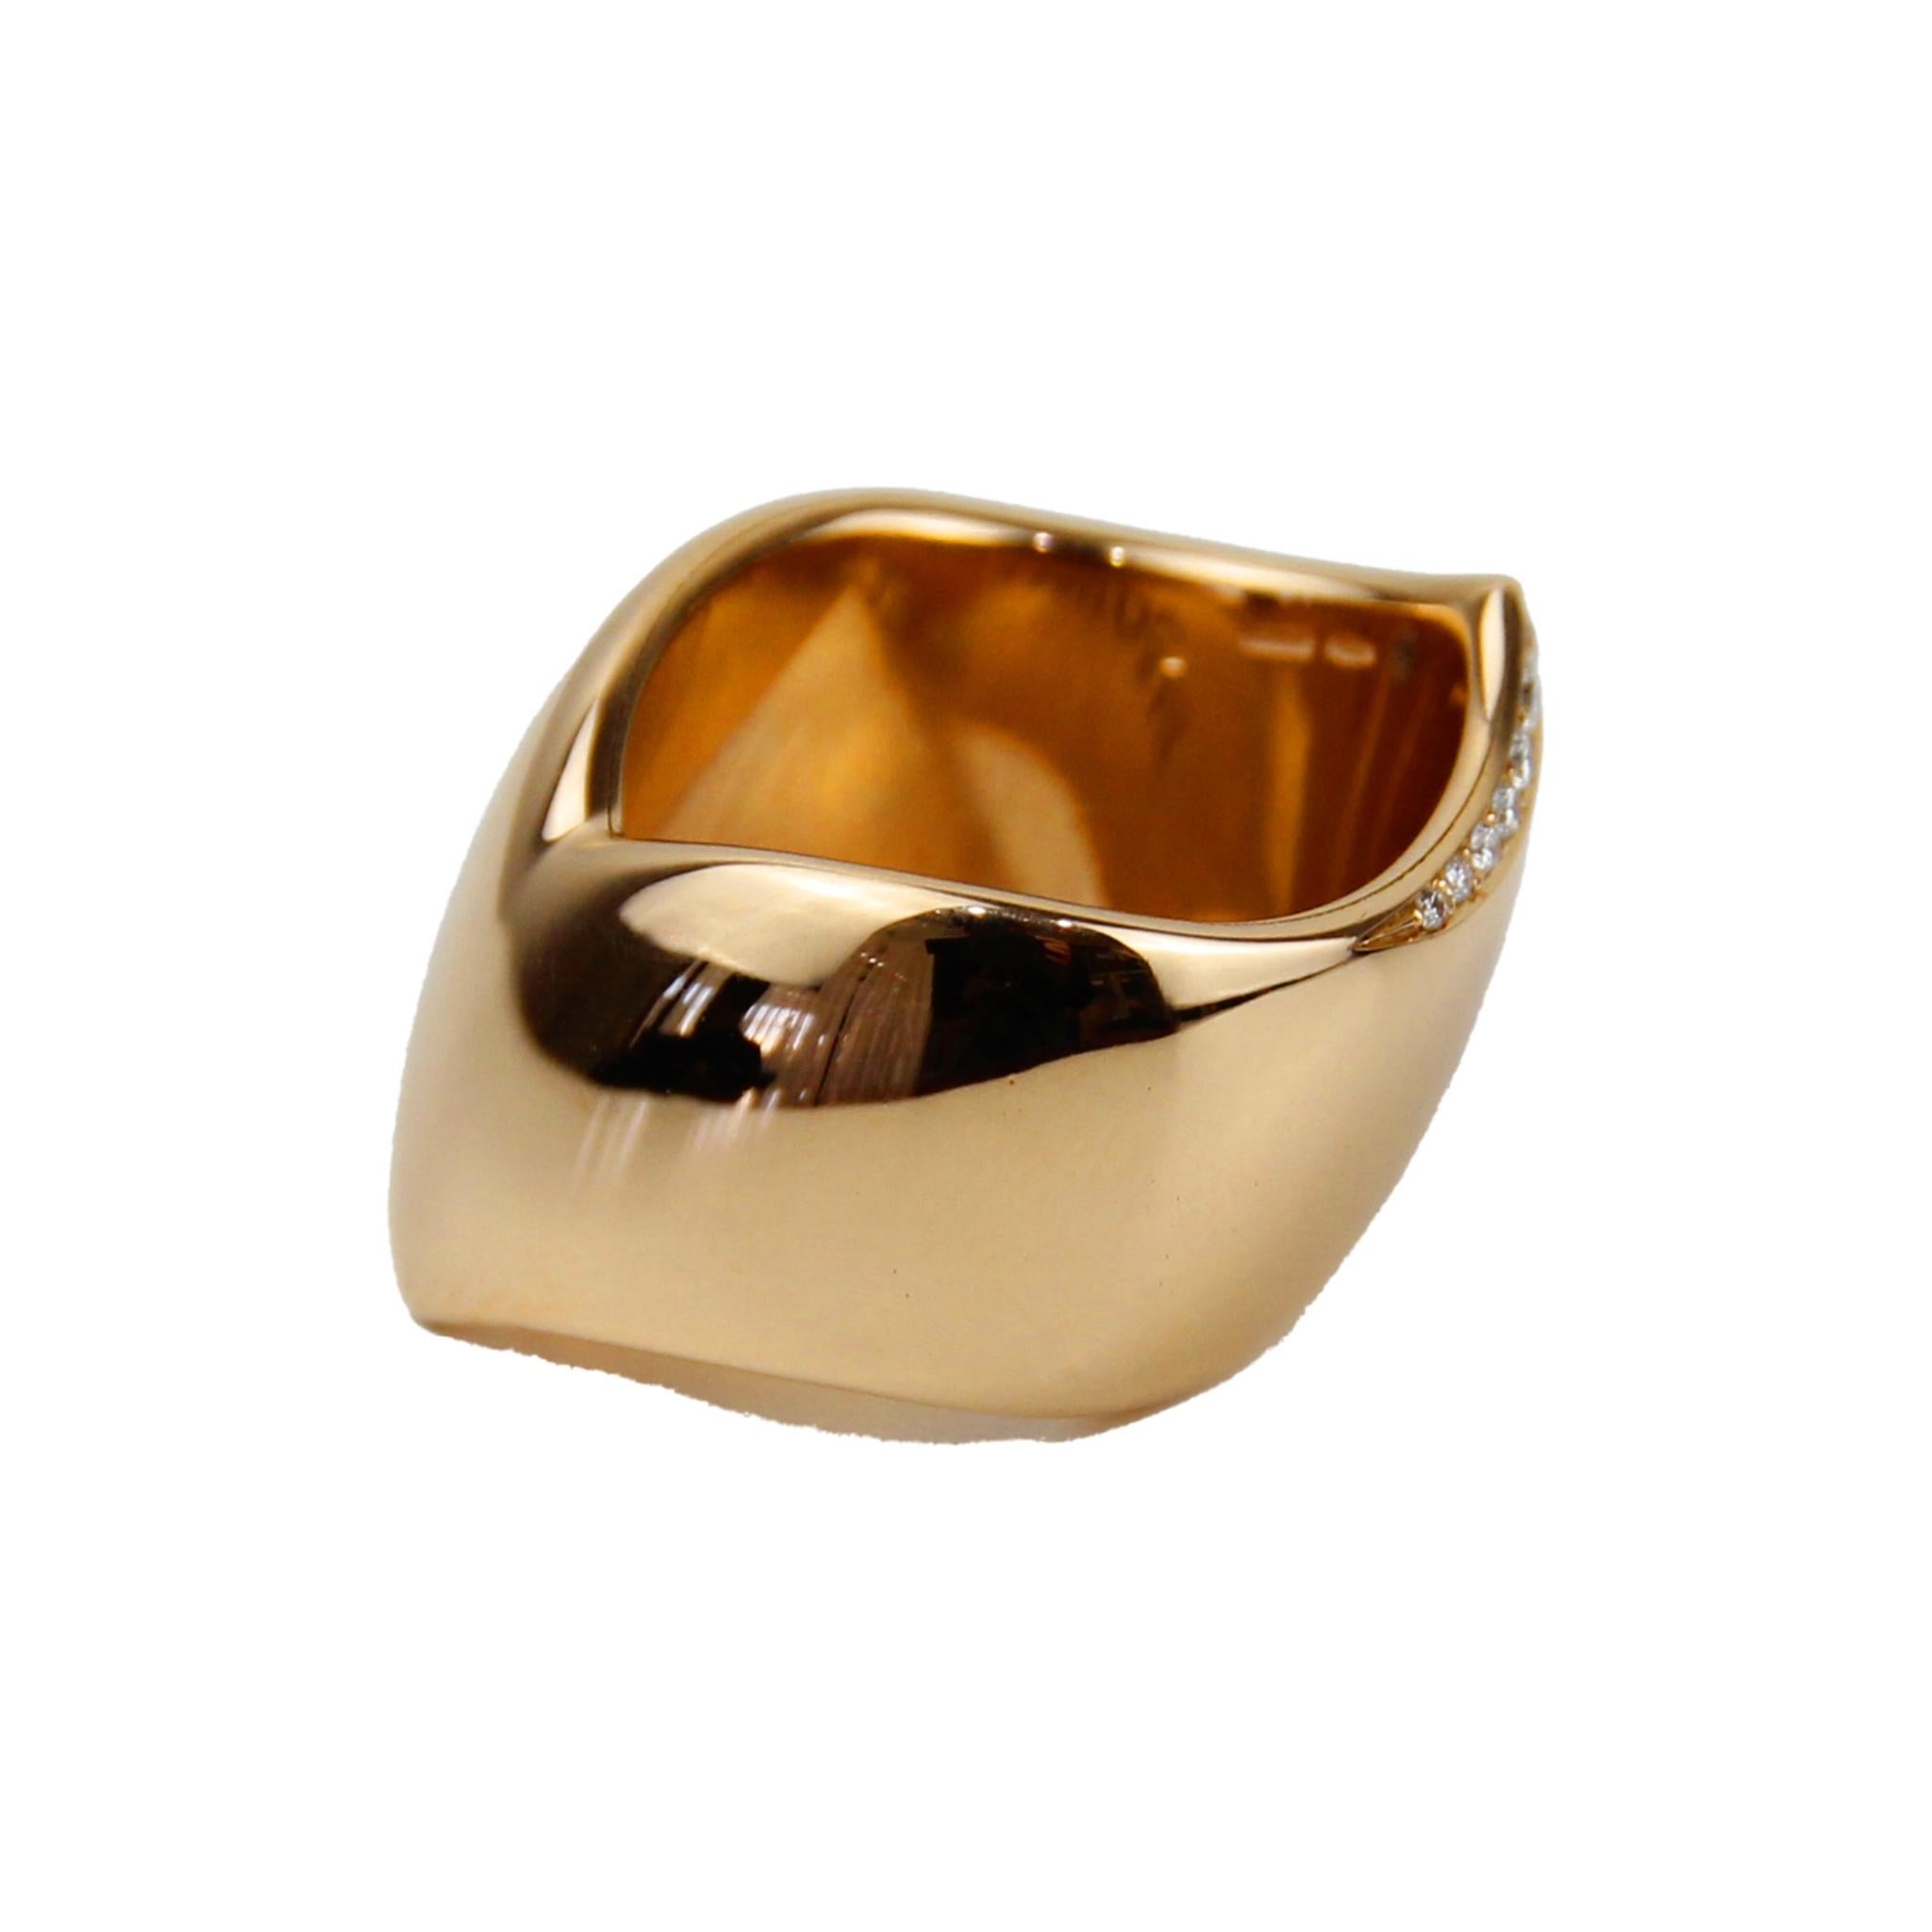 Pasquale Bruni Ring
18K Rose Gold 
Diamond: 0.20ctw
Size: 7.5